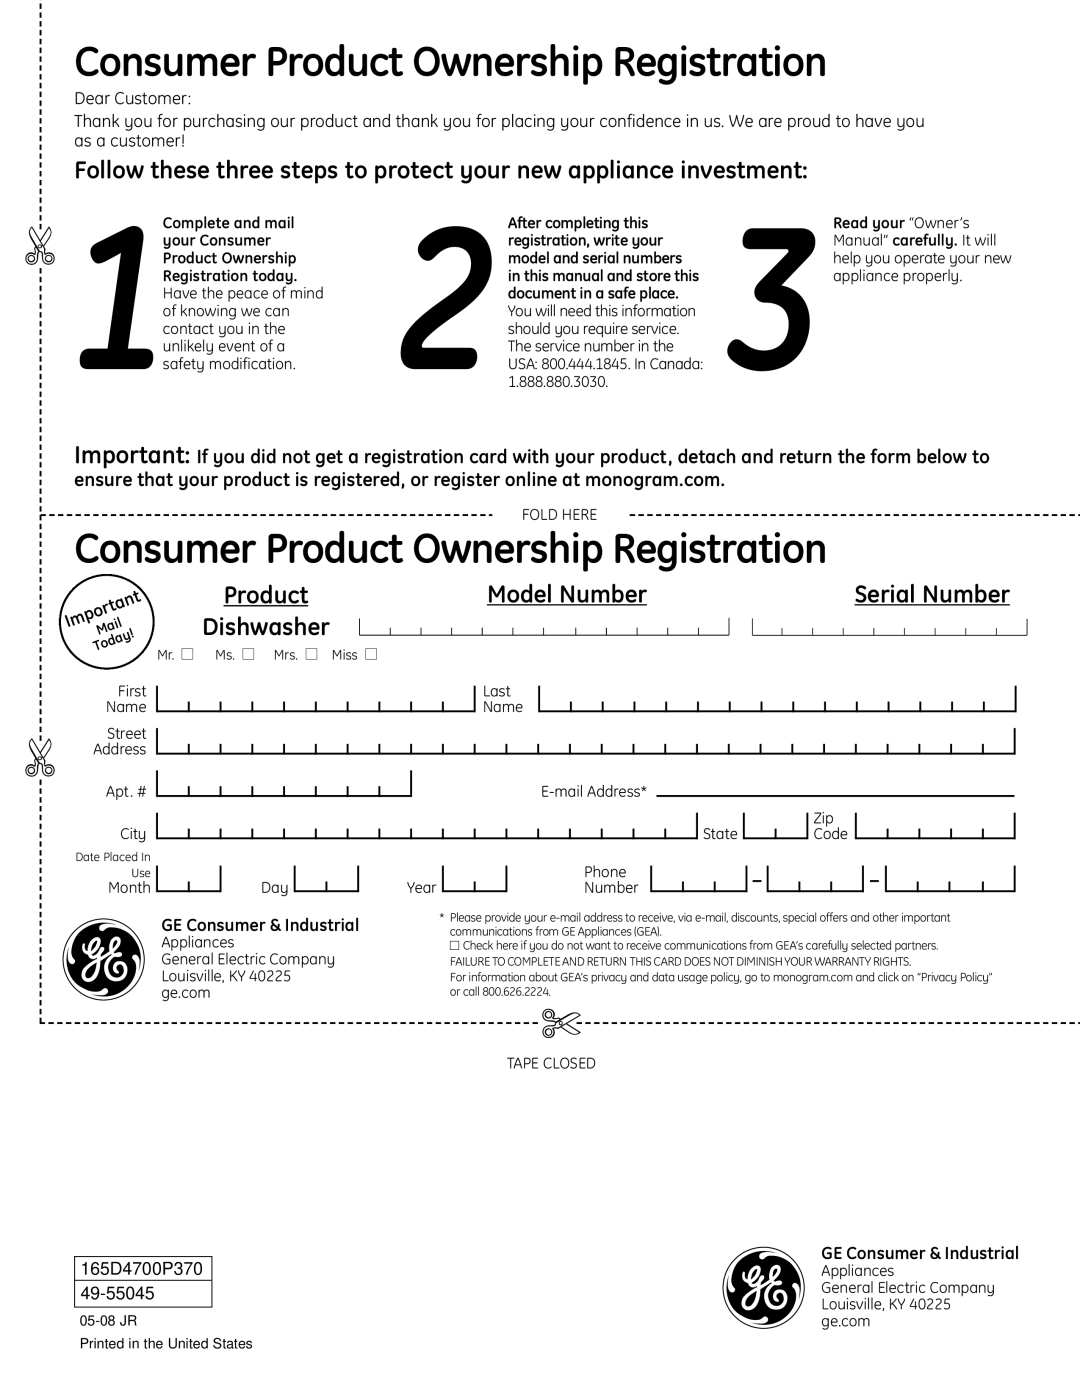 GE Monogram ZBD1850 Consumer Product Ownership Registration, Model Number, Serial Number, Dishwasher, 165D4700P370 